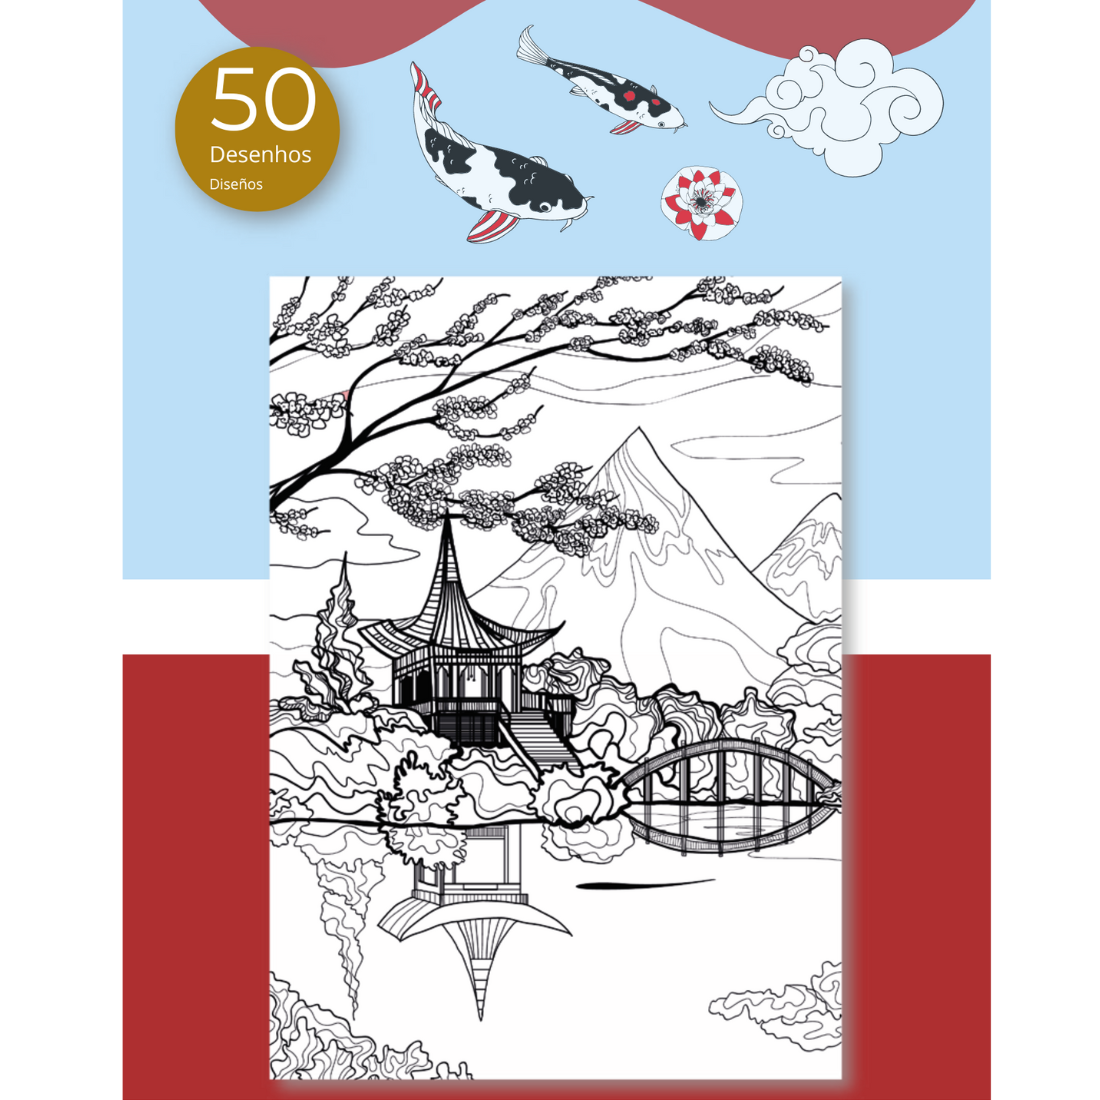 Livro Colorir Arte Relaxar Japan 50 Desenhos